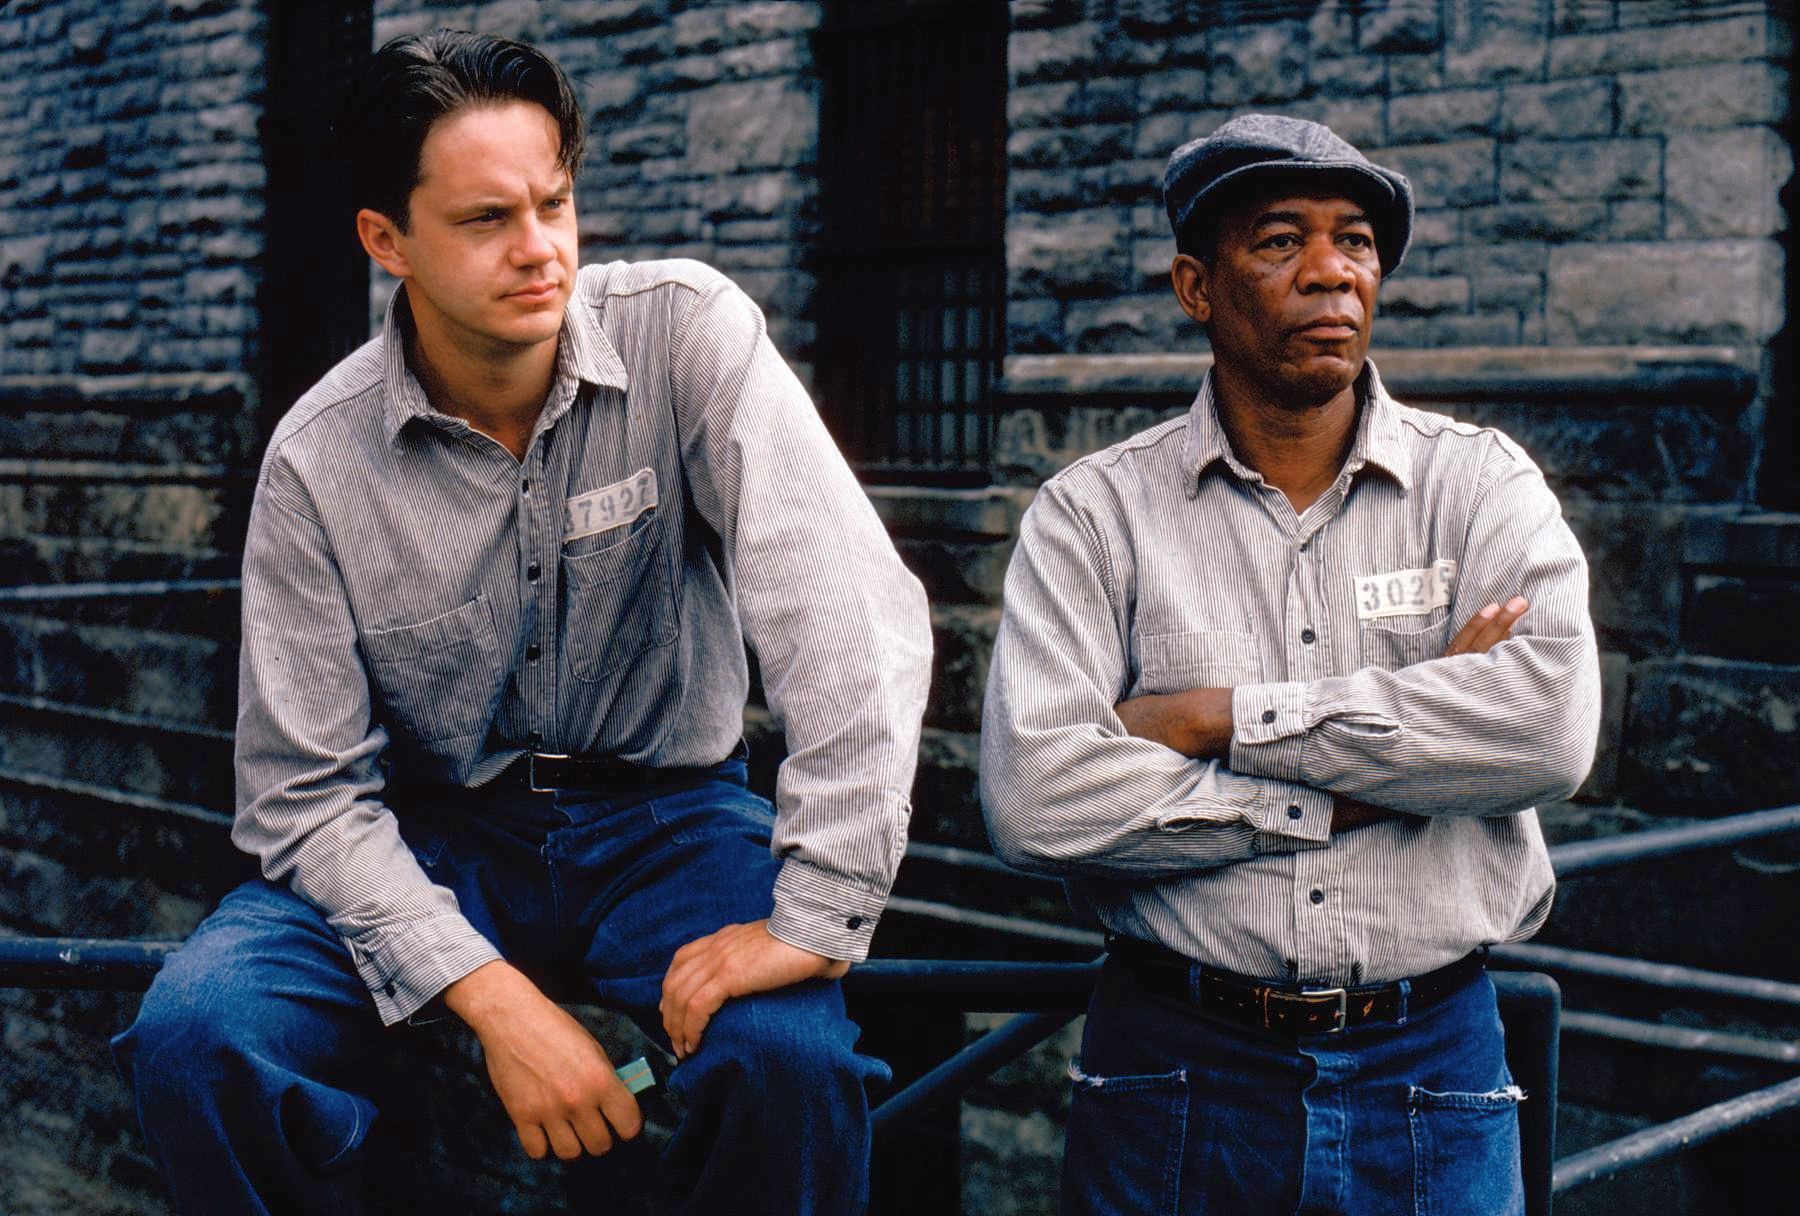 Morgan Freeman and Tim Robbins in The Shawshank Redemption (1994)